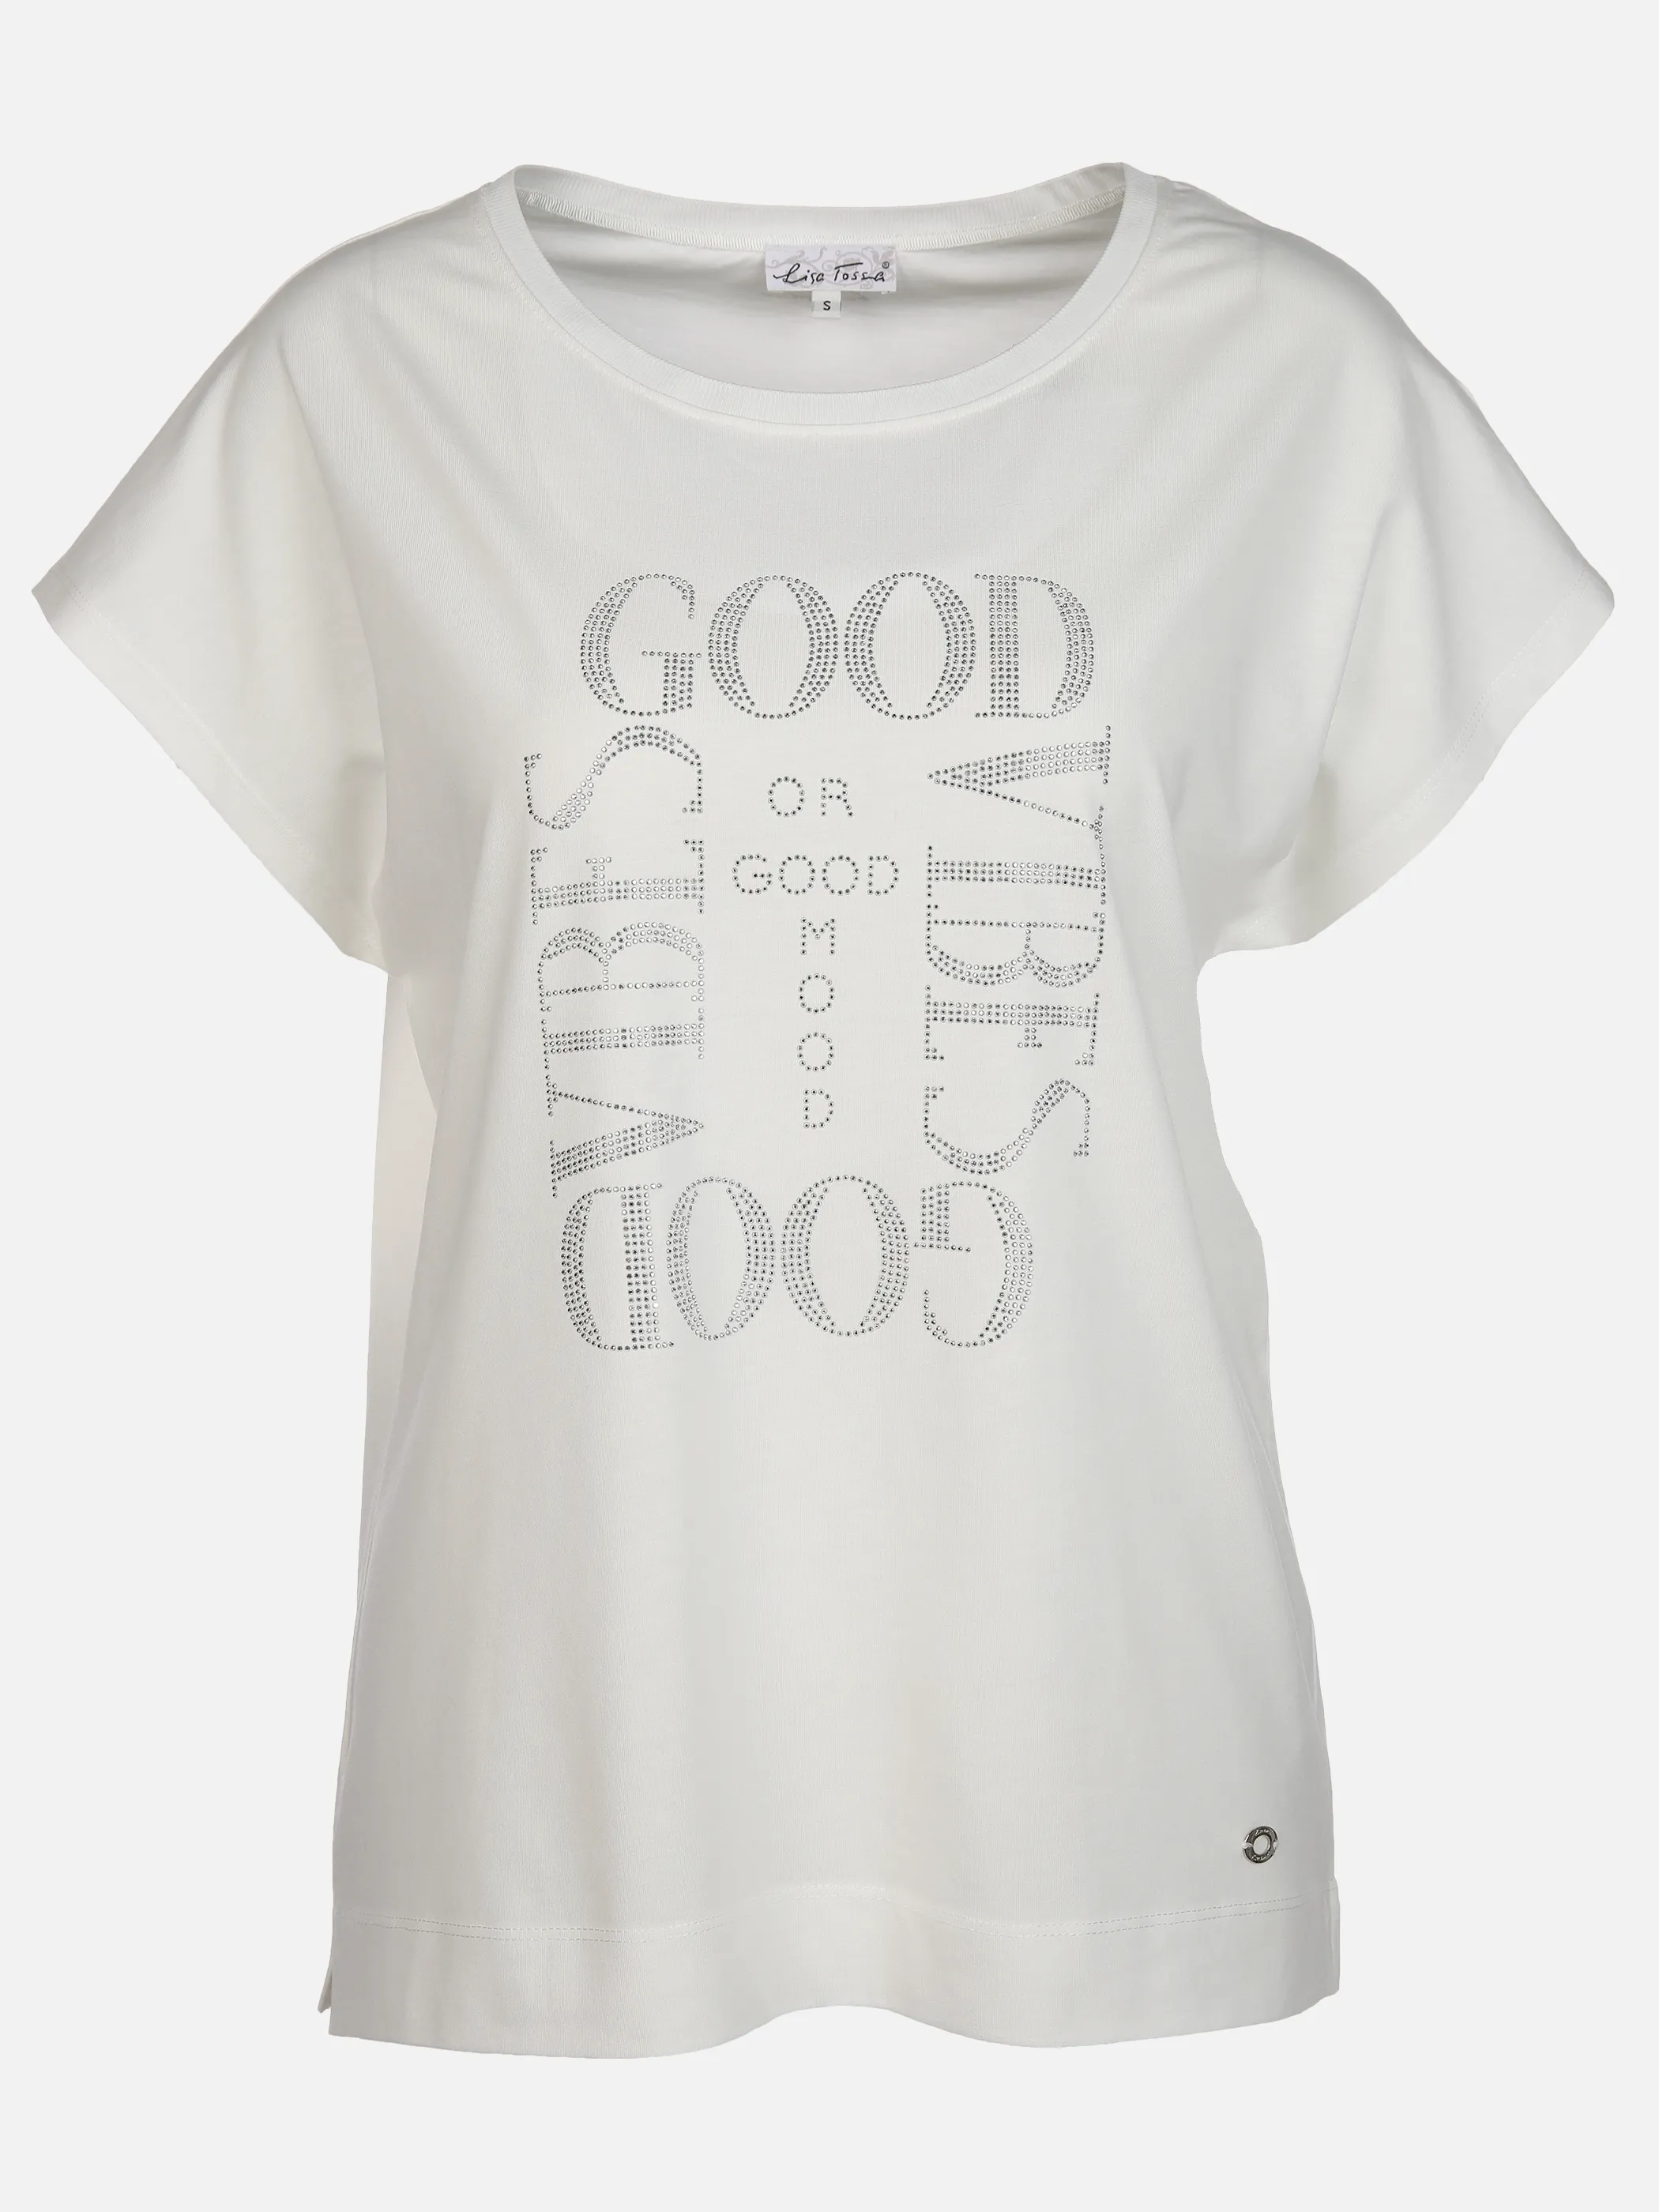 Lisa Tossa Da-T-Shirt m. Straßapplikation Weiß 893032 OFFWHITE 1